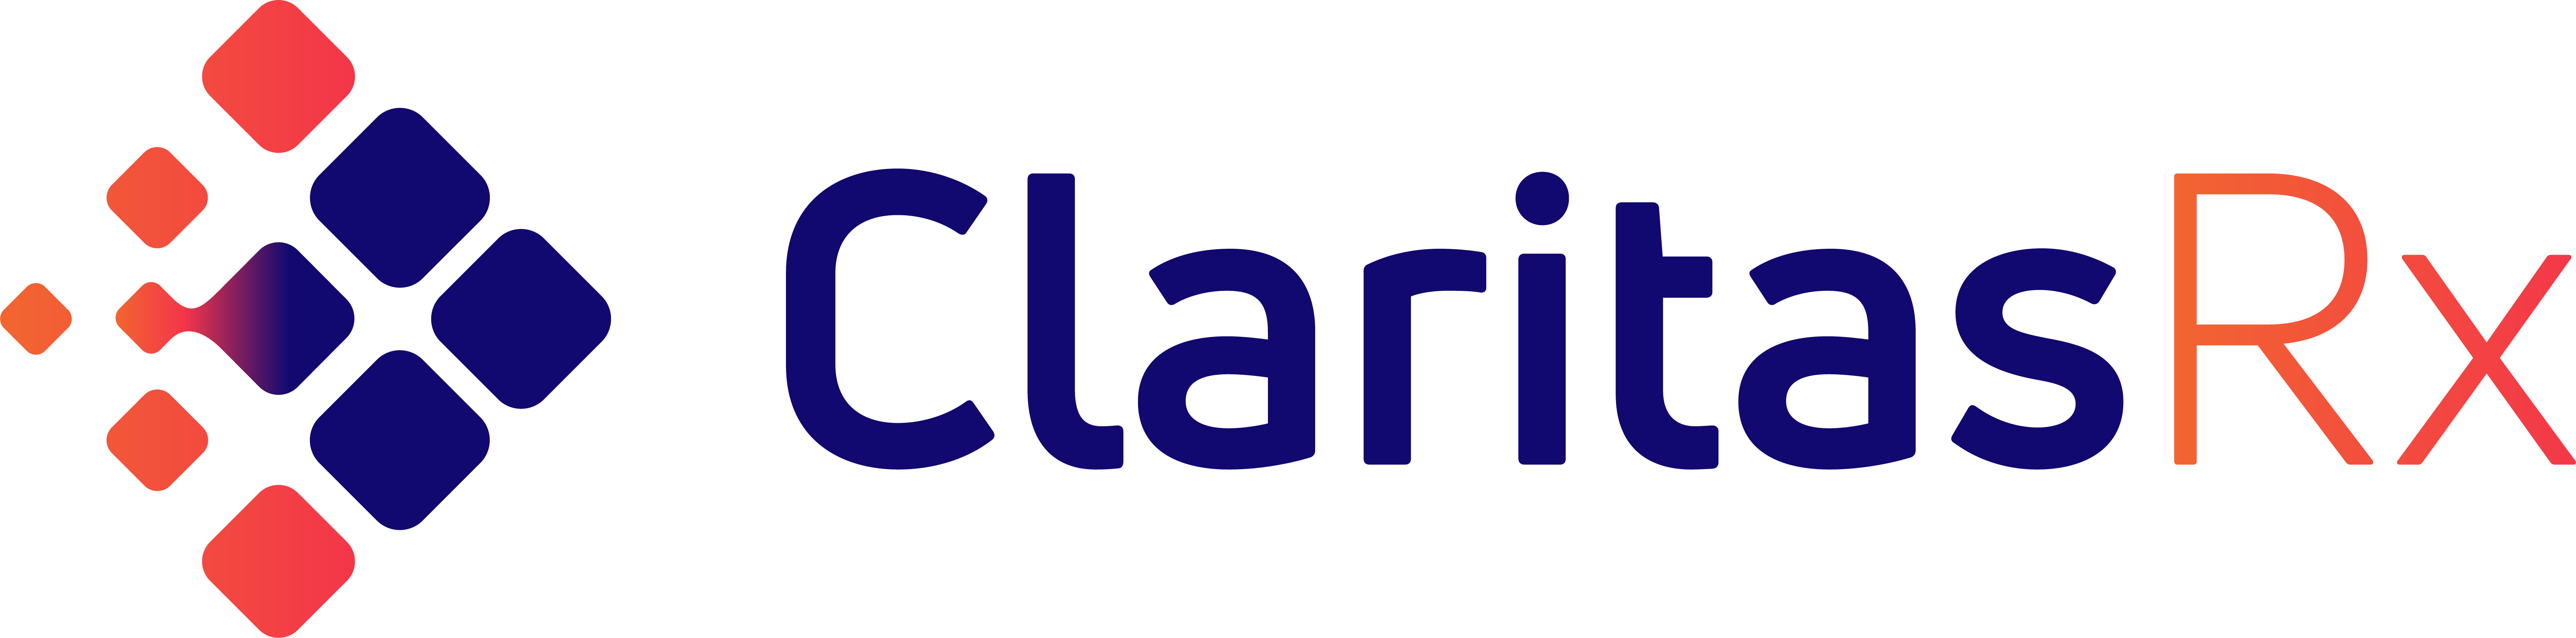 Claritas rx logo